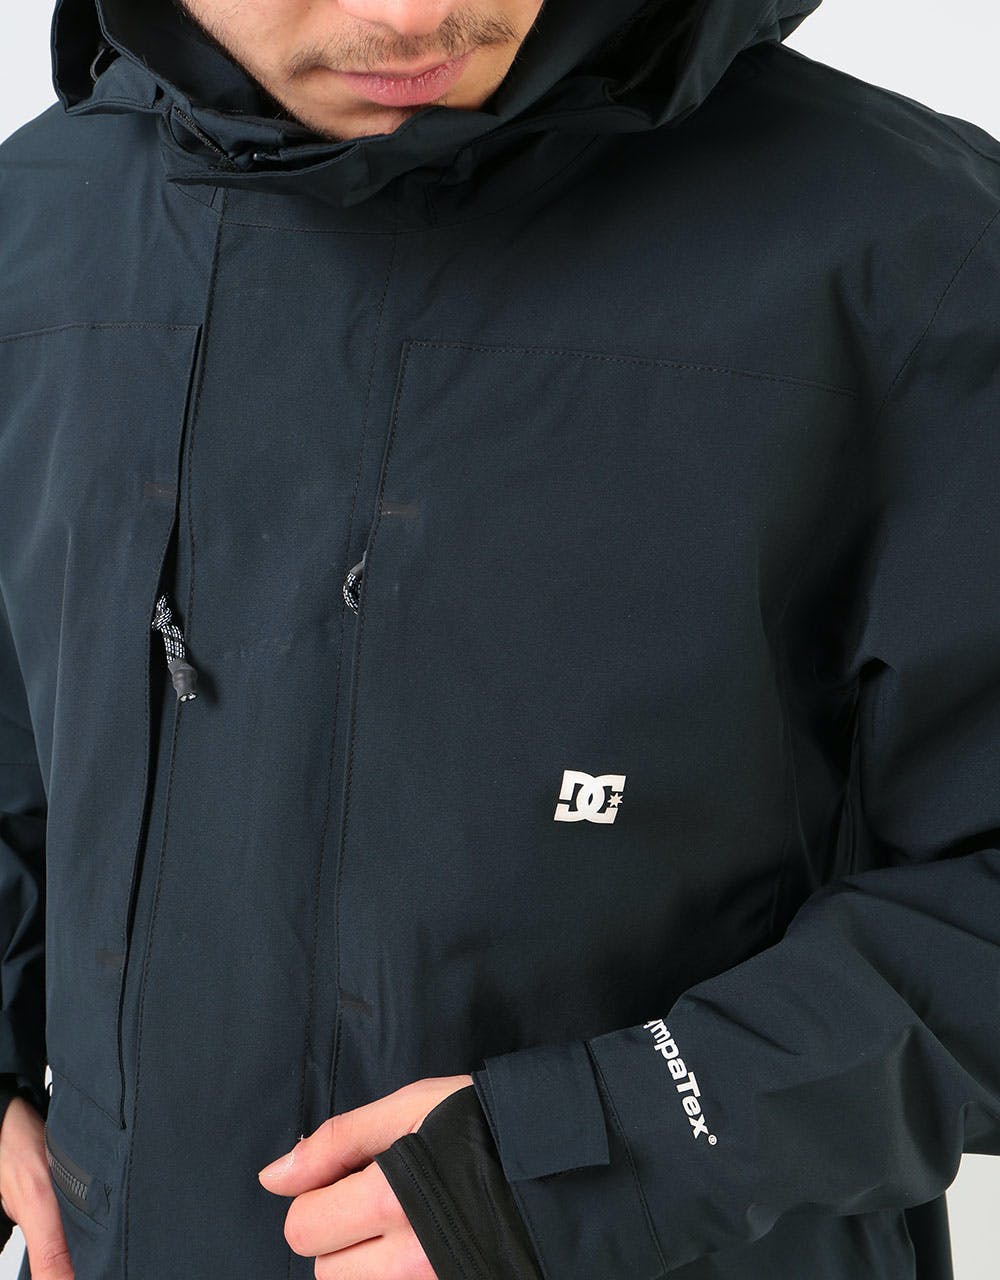 DC Command 2020 Snowboard Jacket - Black